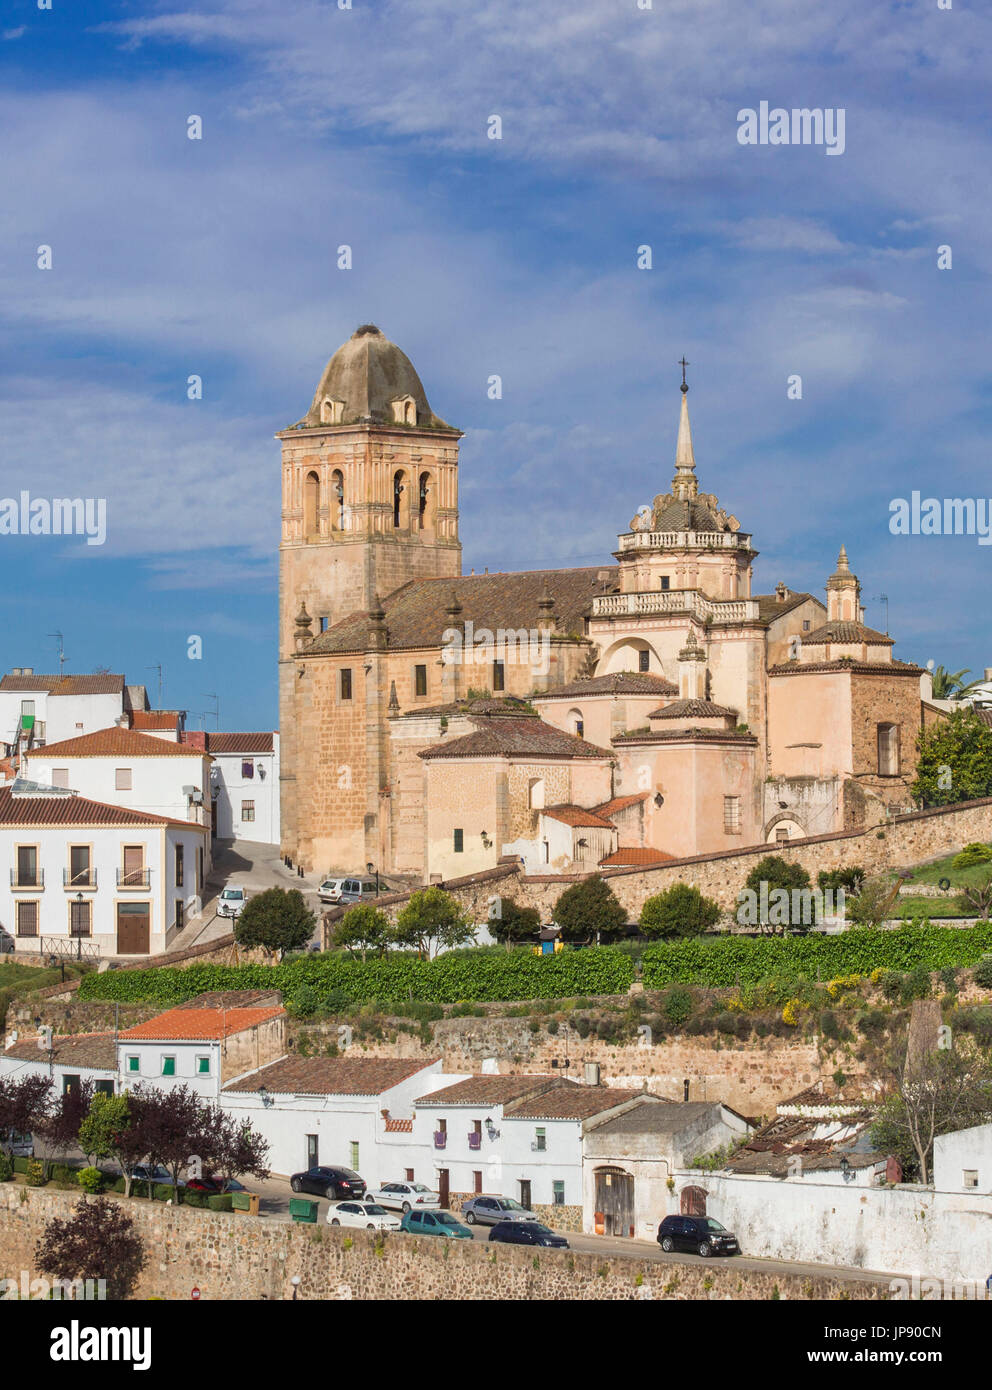 Spain, Extremadura Region, Jerez de los Caballeros City, Encarnacion Church Stock Photo